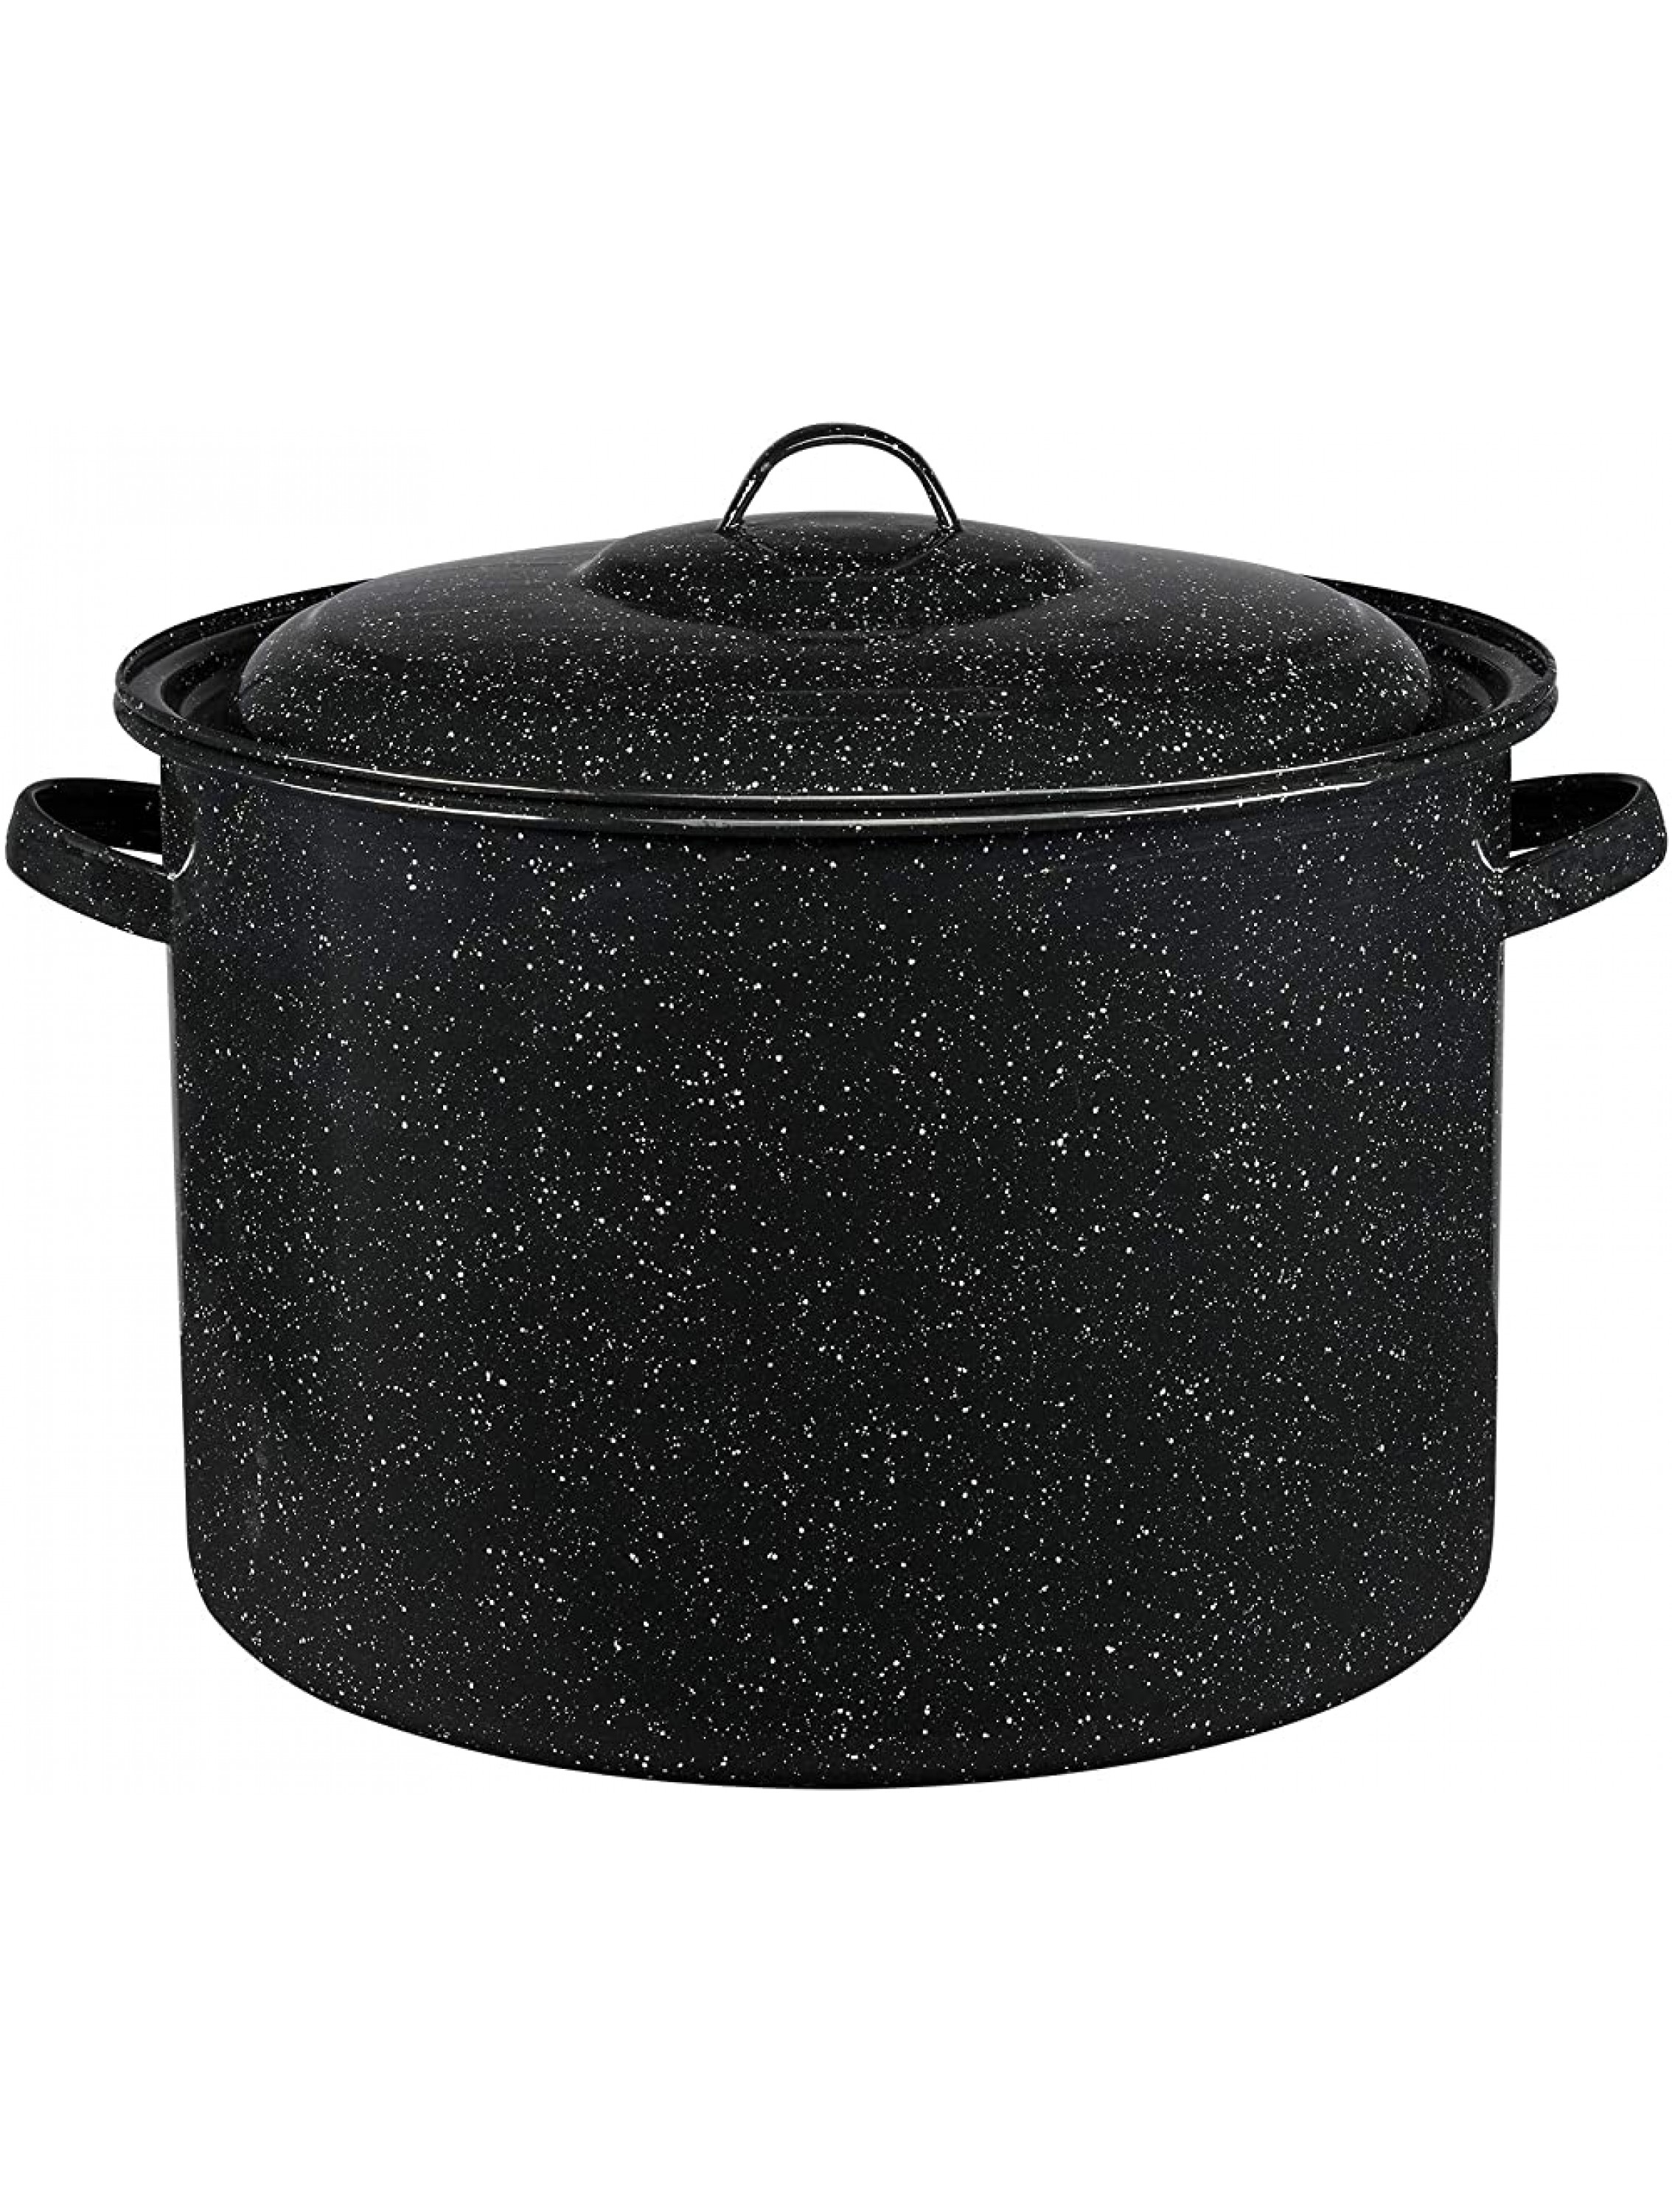 Granite Ware Enamel on Steel 21-Quart Stock Pot with lid Speckled Black - B6TZ1ZKTA